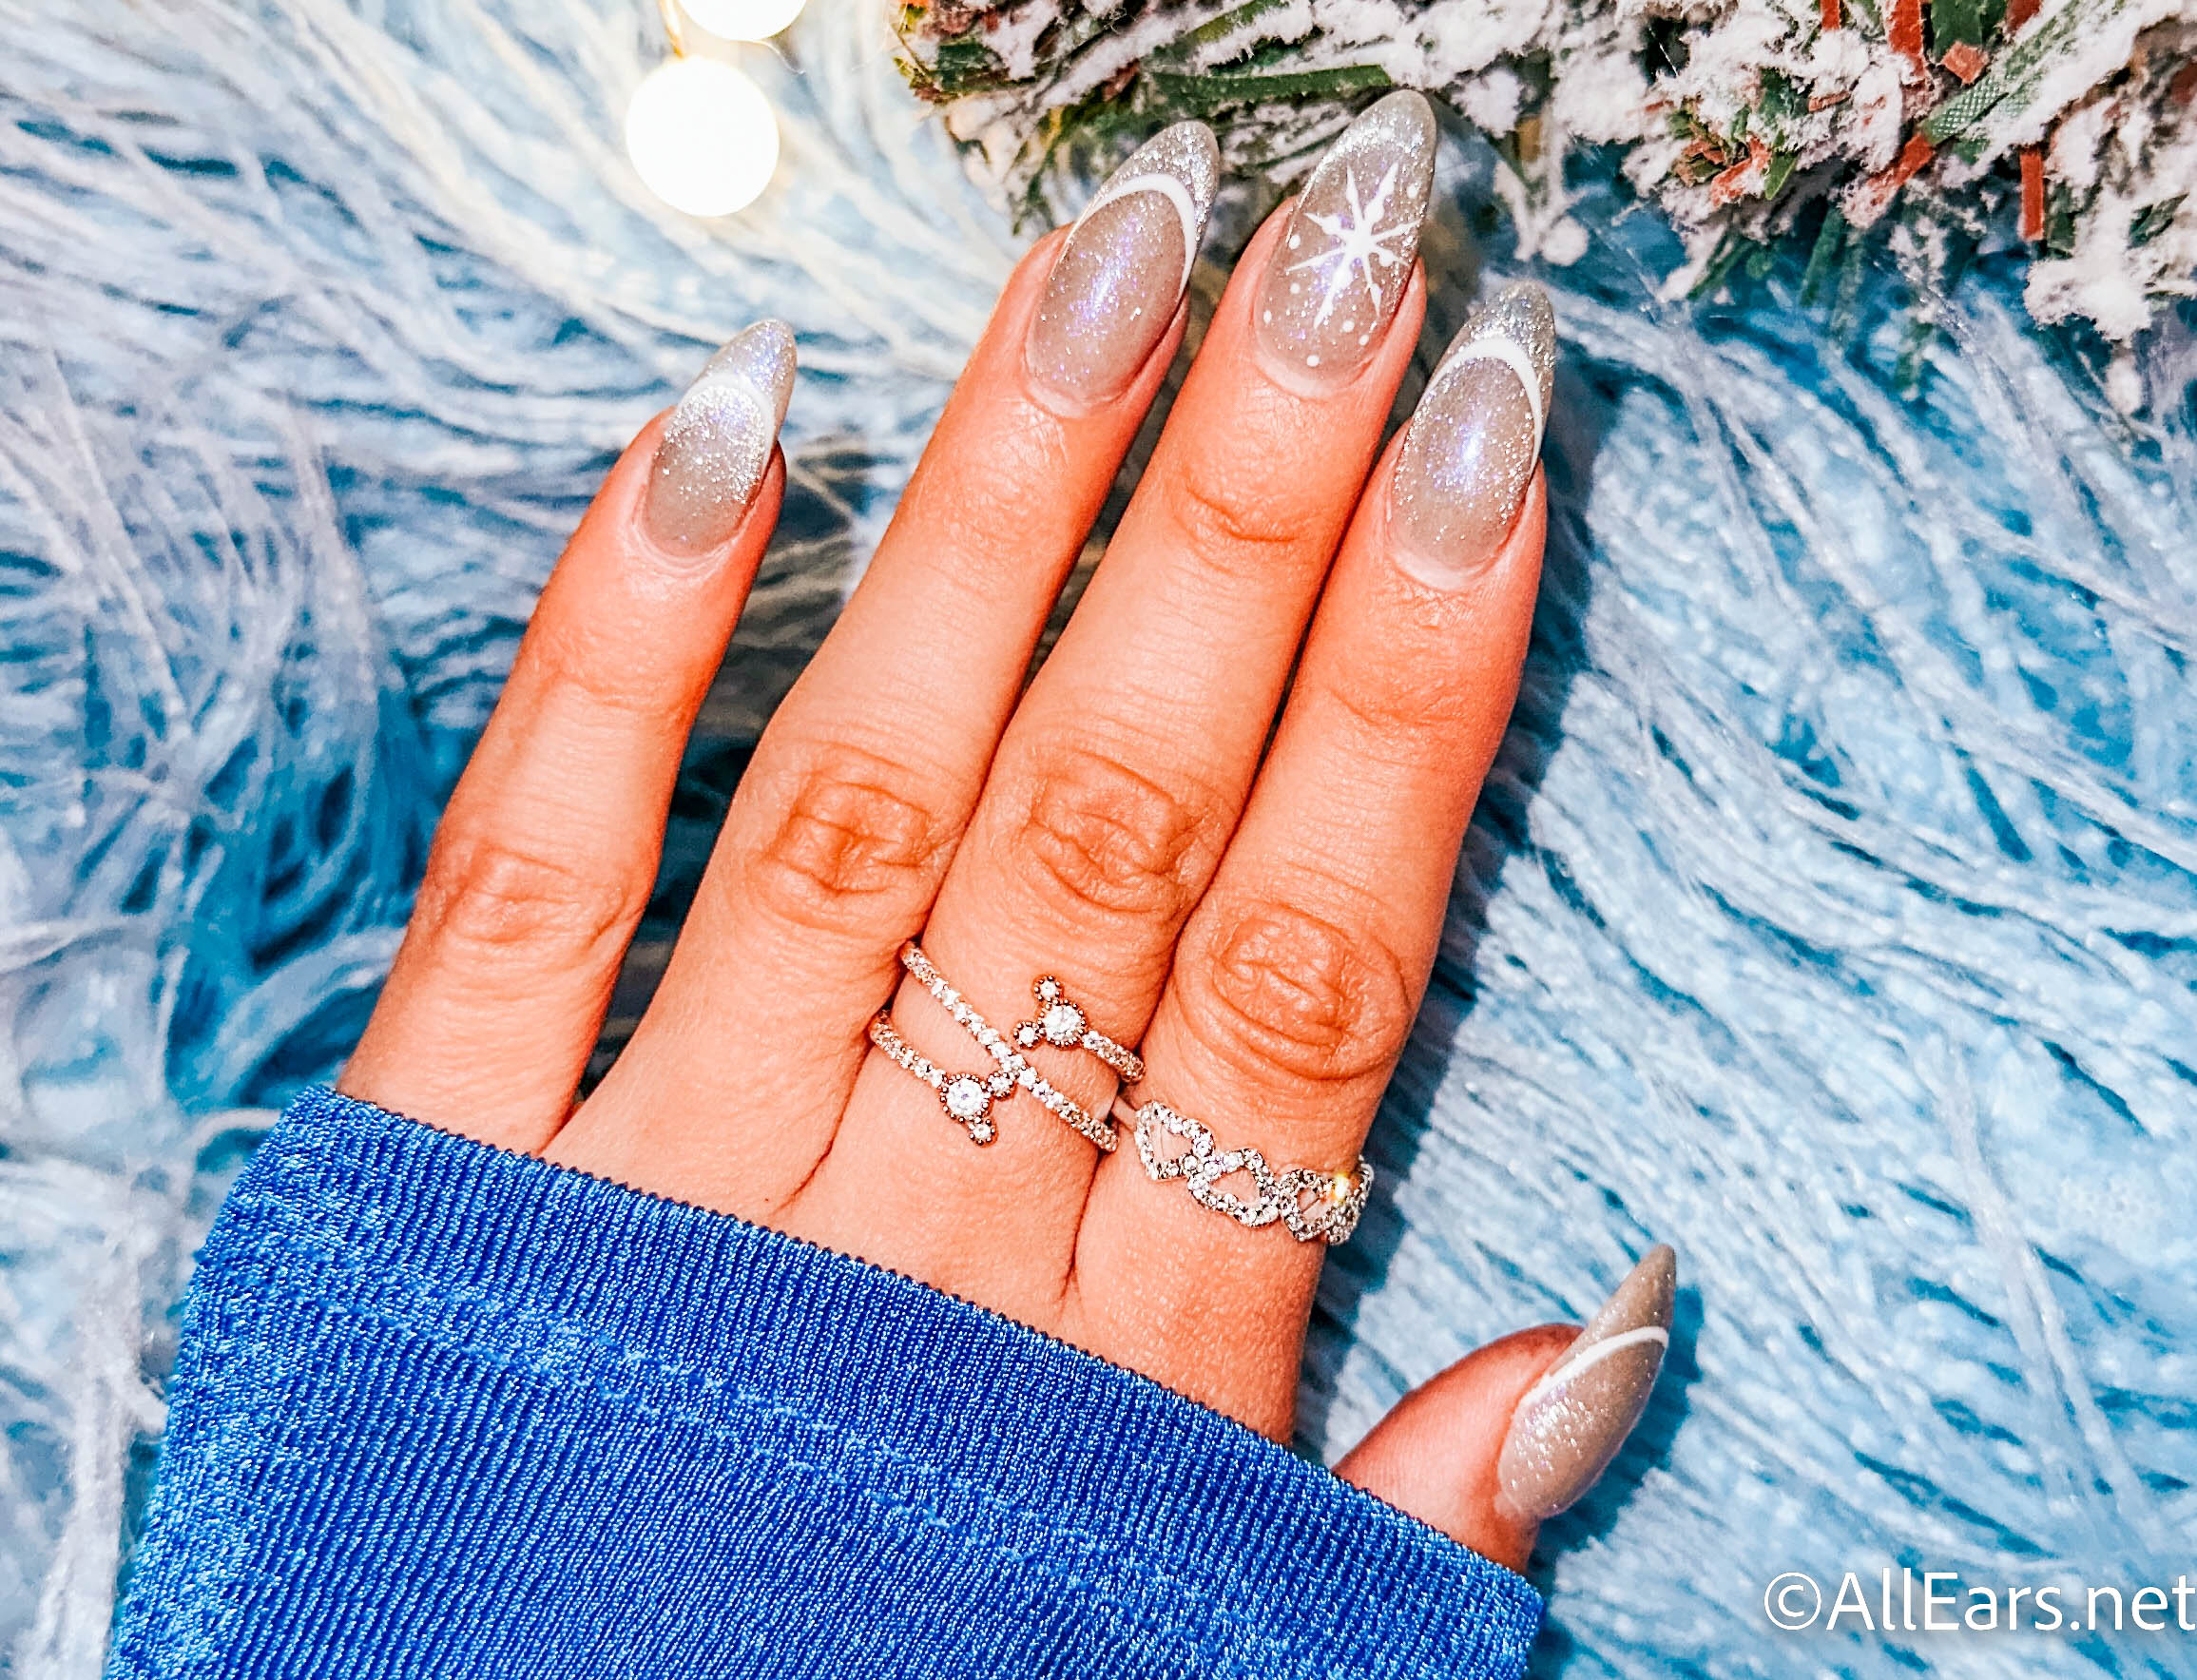 Frozen nails on Pinterest